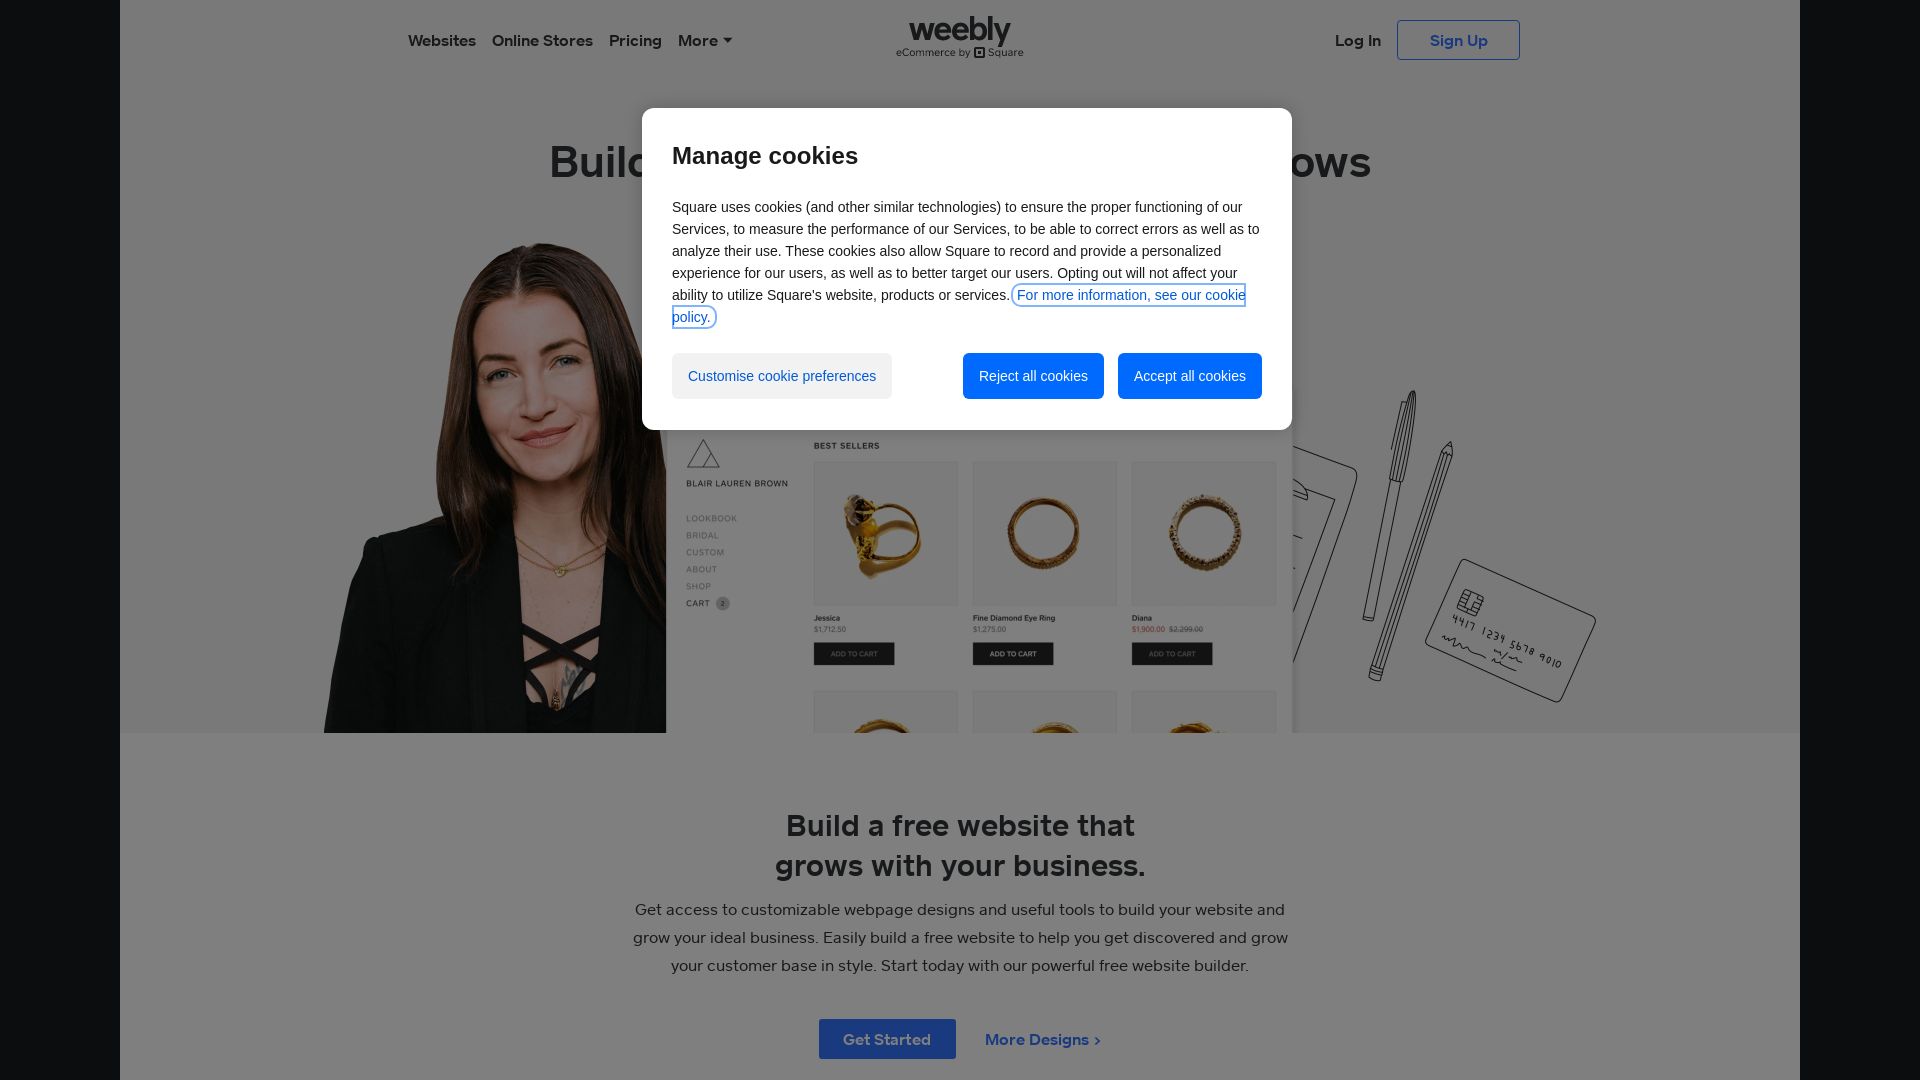 вебсайт weebly.com Є   ONLINE